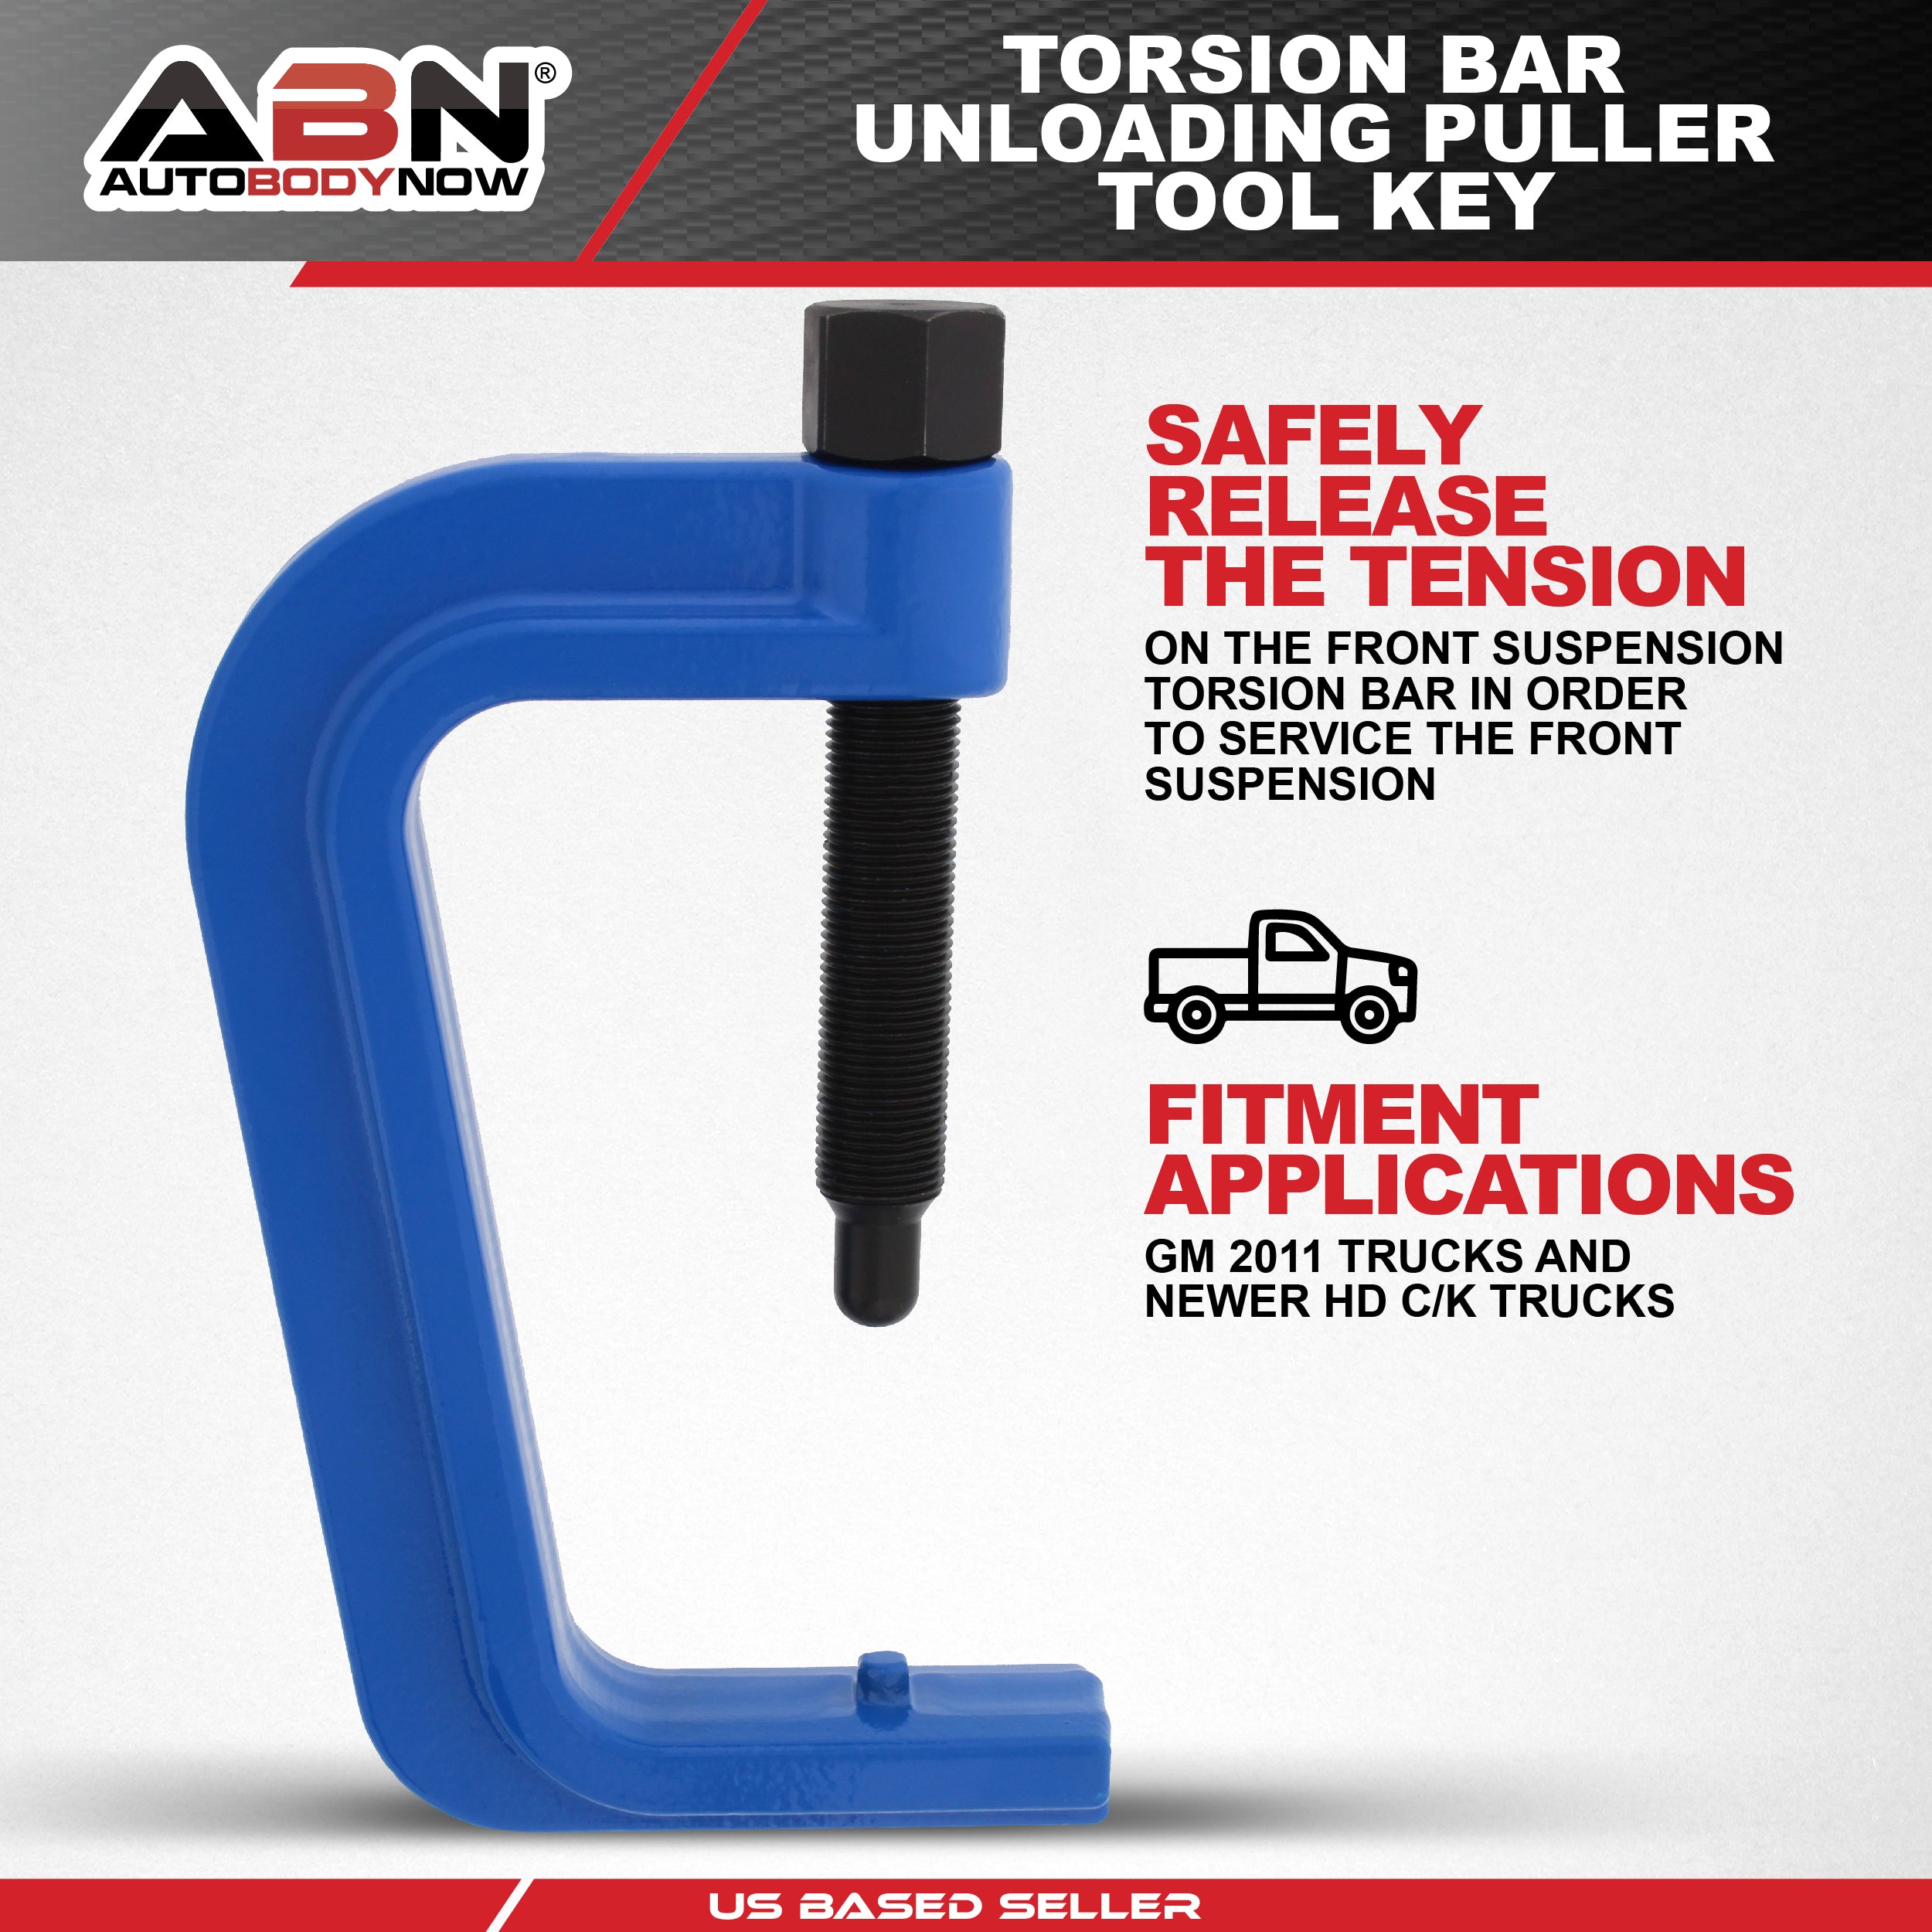 Torsion Bar Unloading Puller Tool Key for GM 2011 & Newer HD C/K Truck